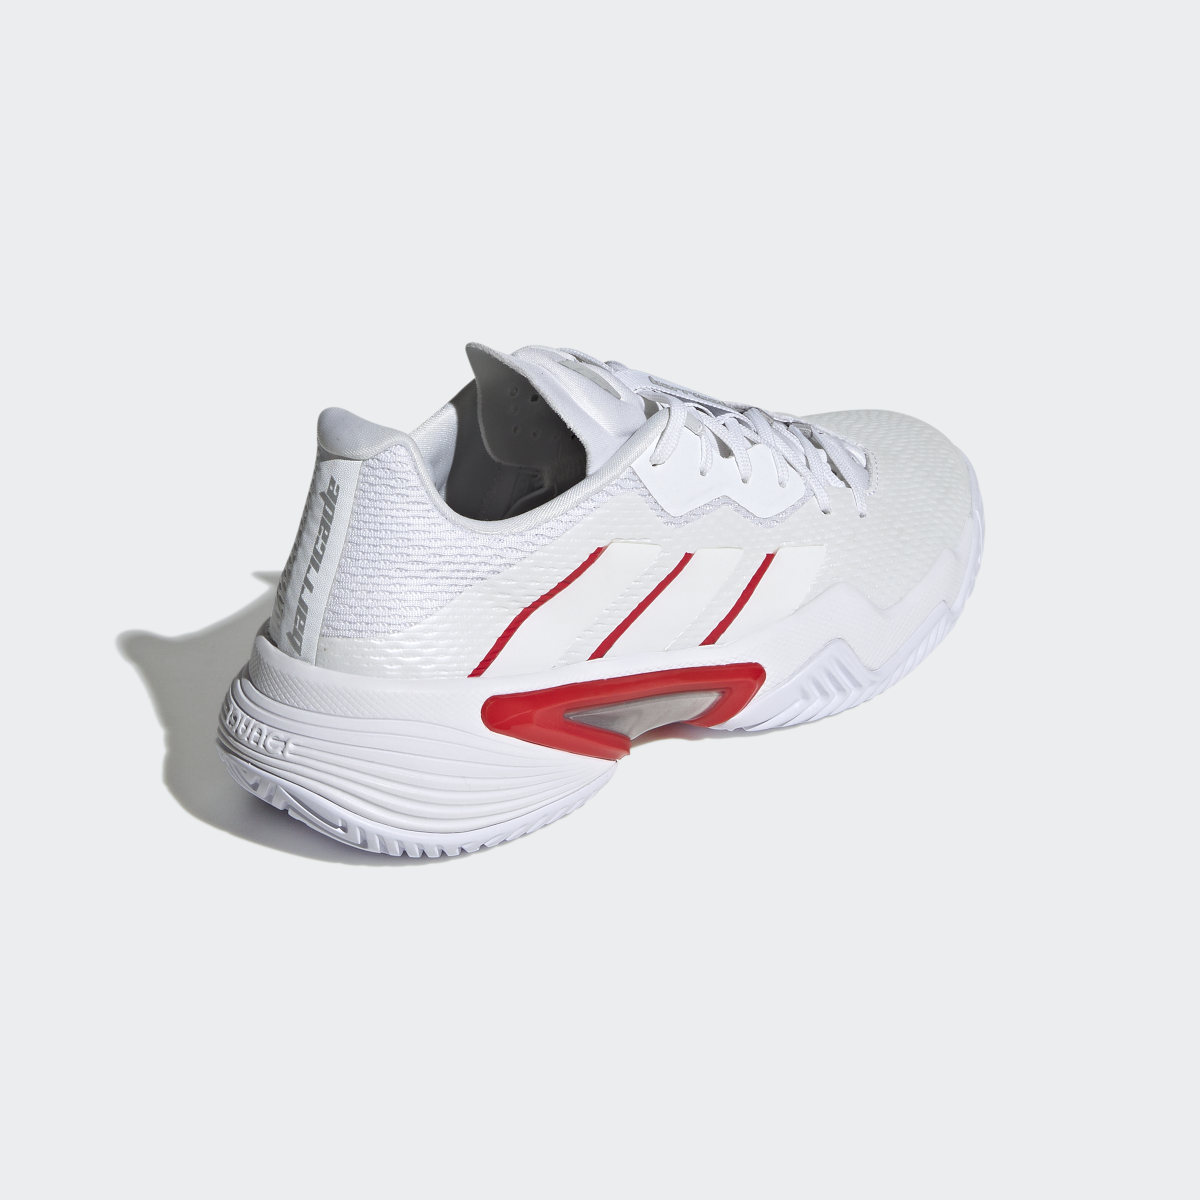 Adidas Barricade Tennis Shoes. 9